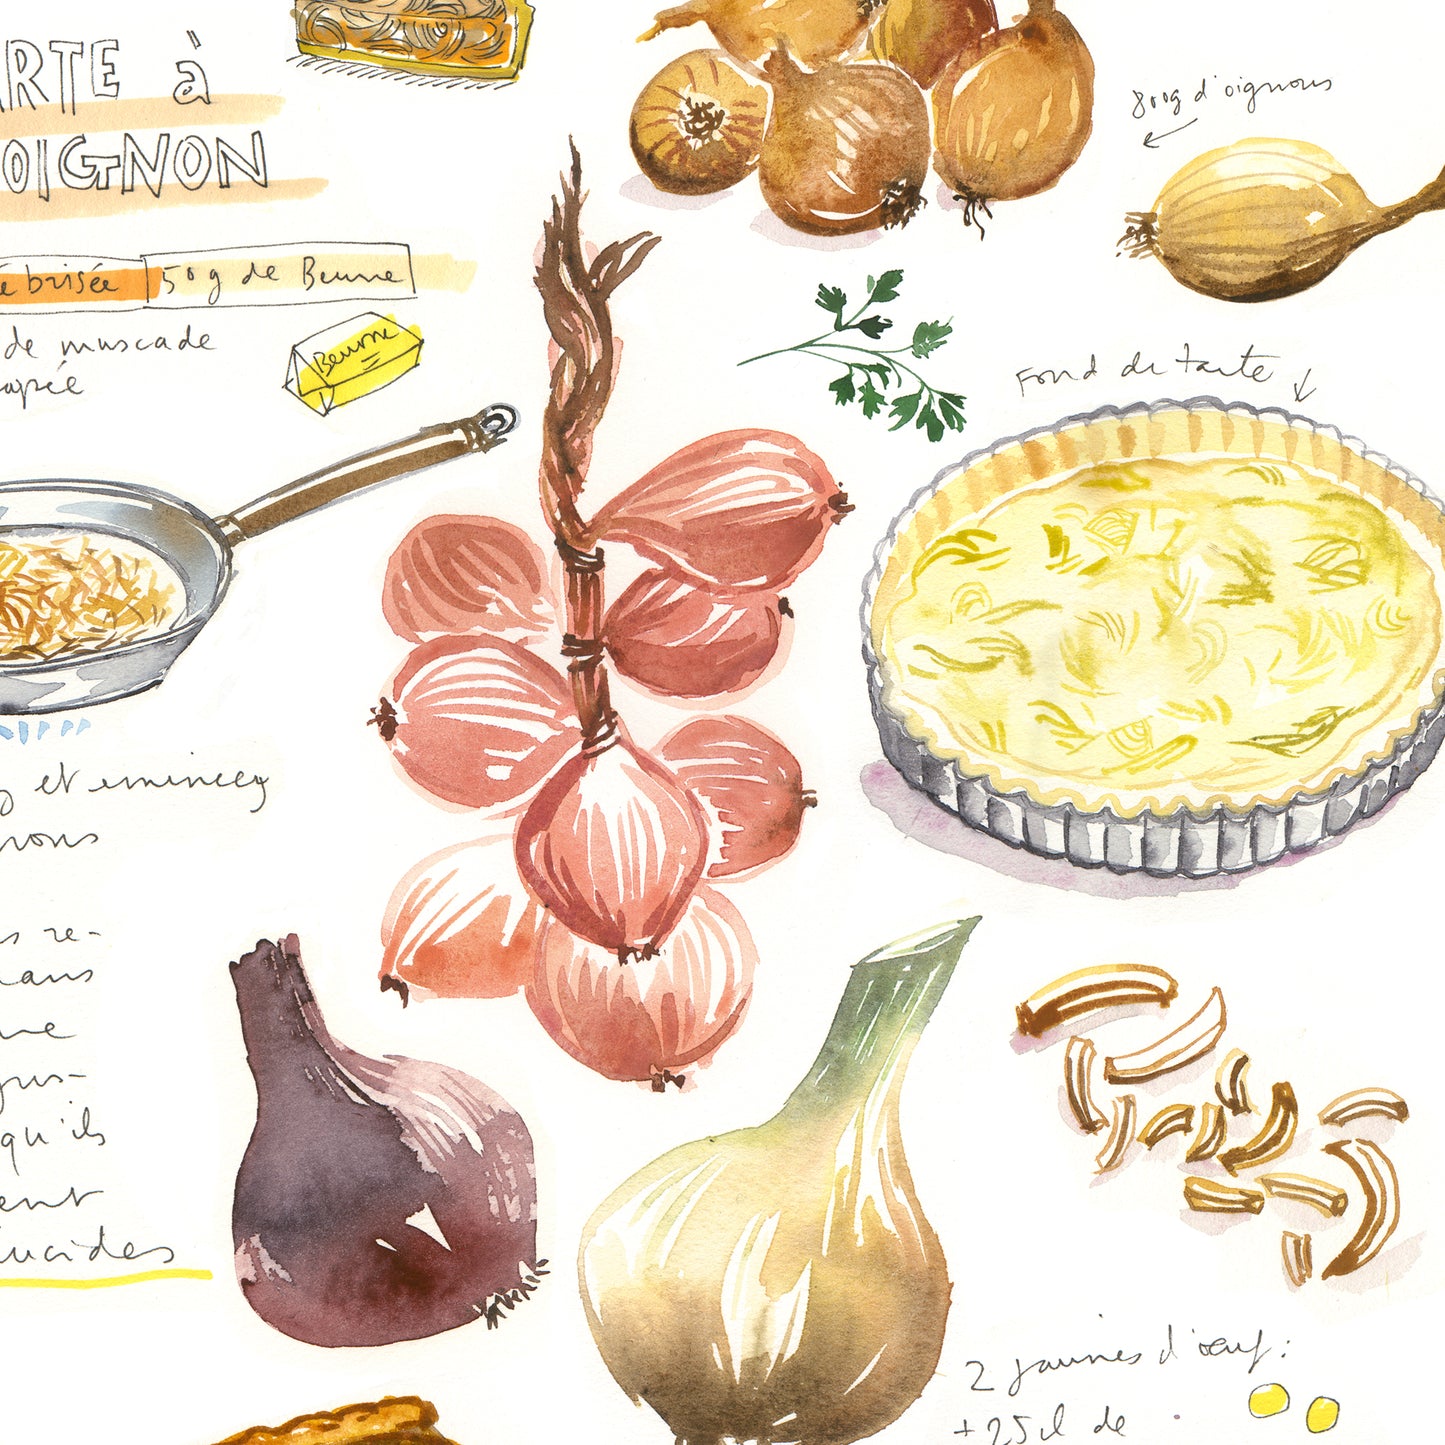 French onion tart recipe